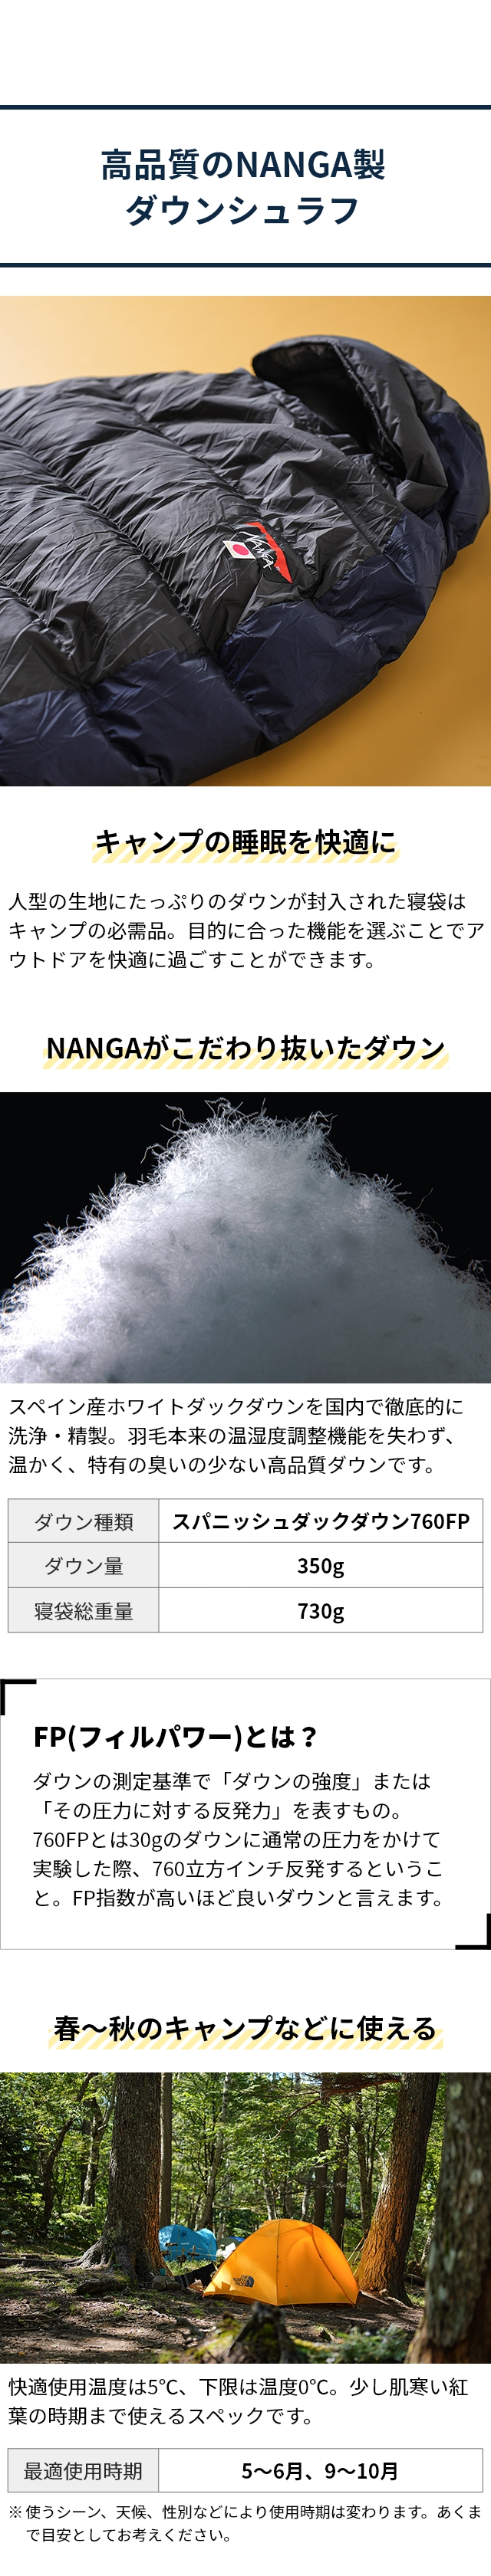 NANGA(ナンガ) オーロラライト(AURORA LIGHT) 350DX